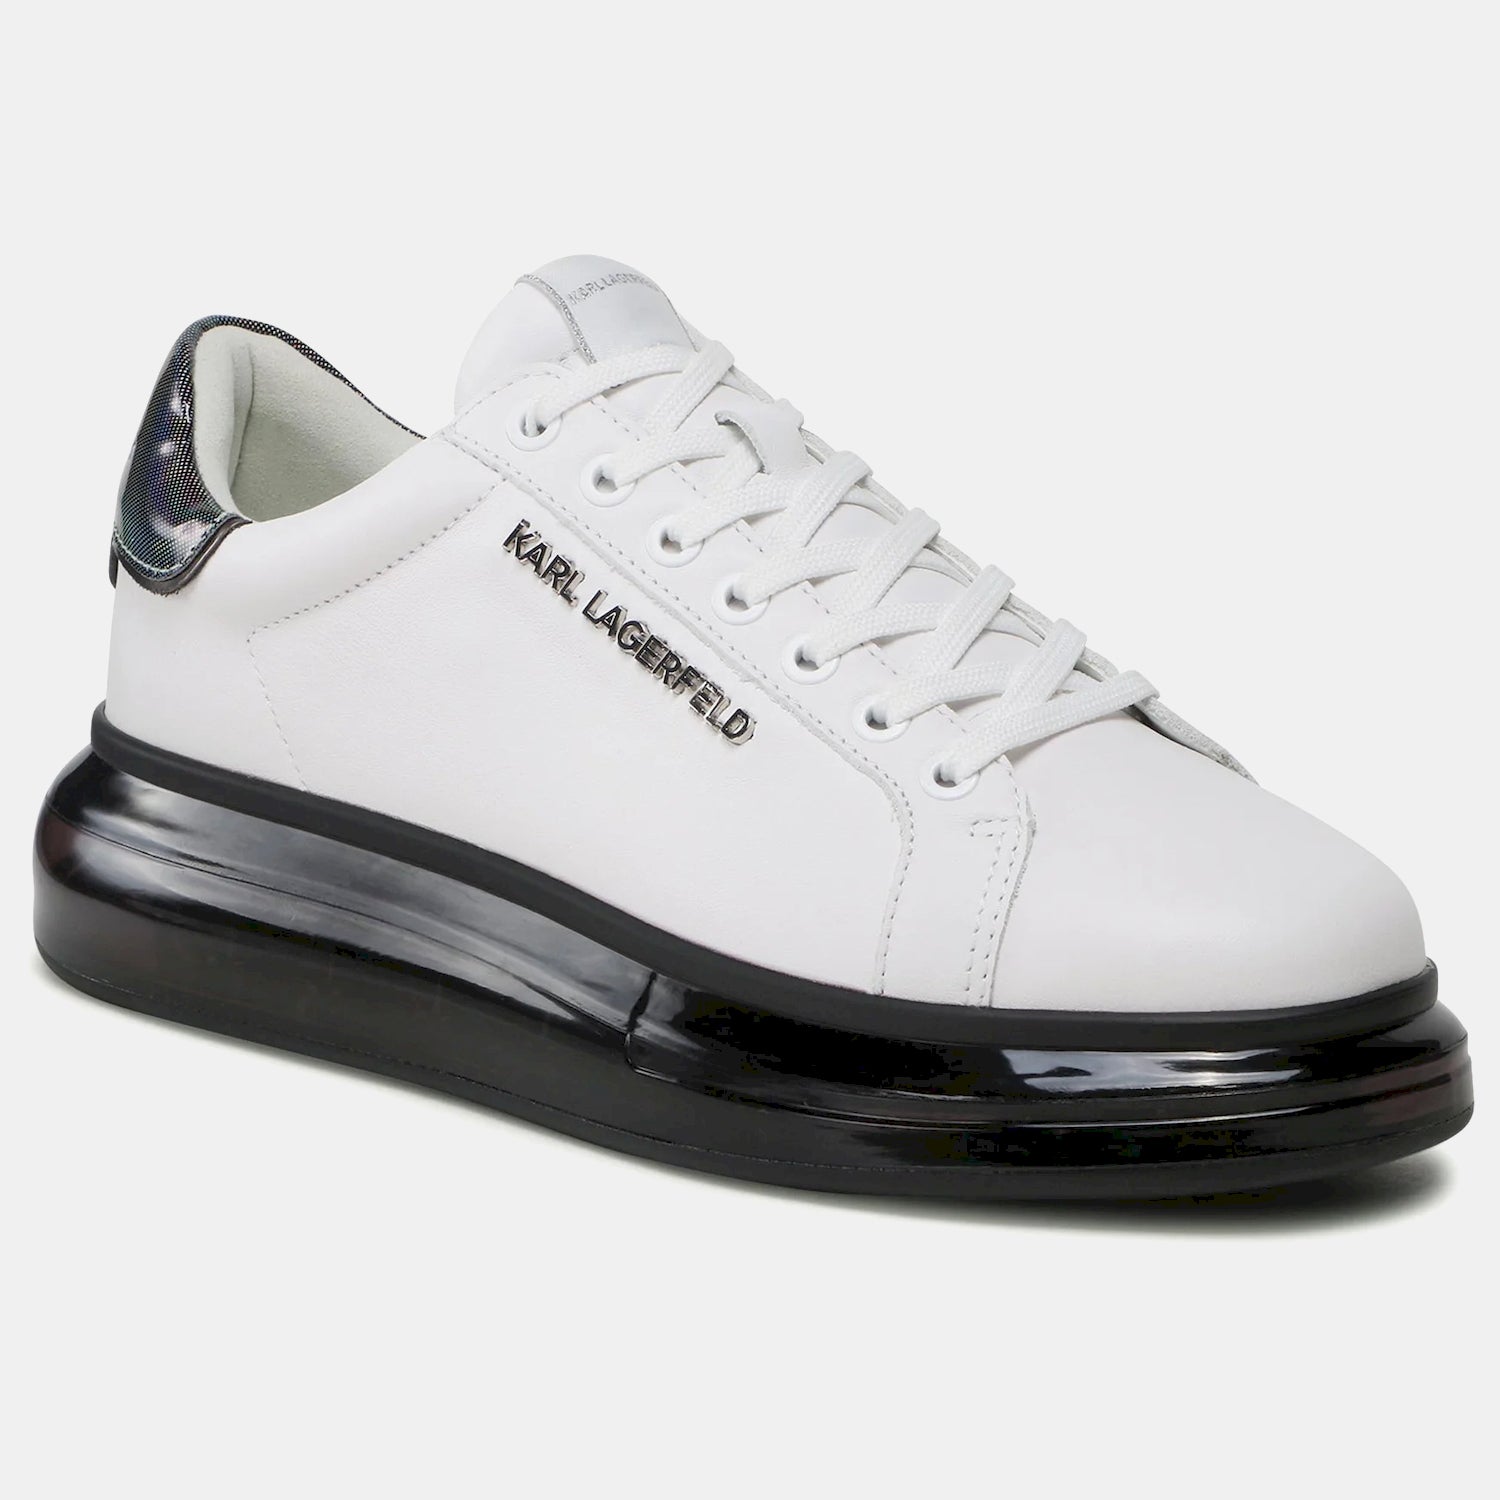 Karl Lagerfeld Sapatilhas Sneakers Shoes Kl52625 Whi Black Branco Preto_shot5